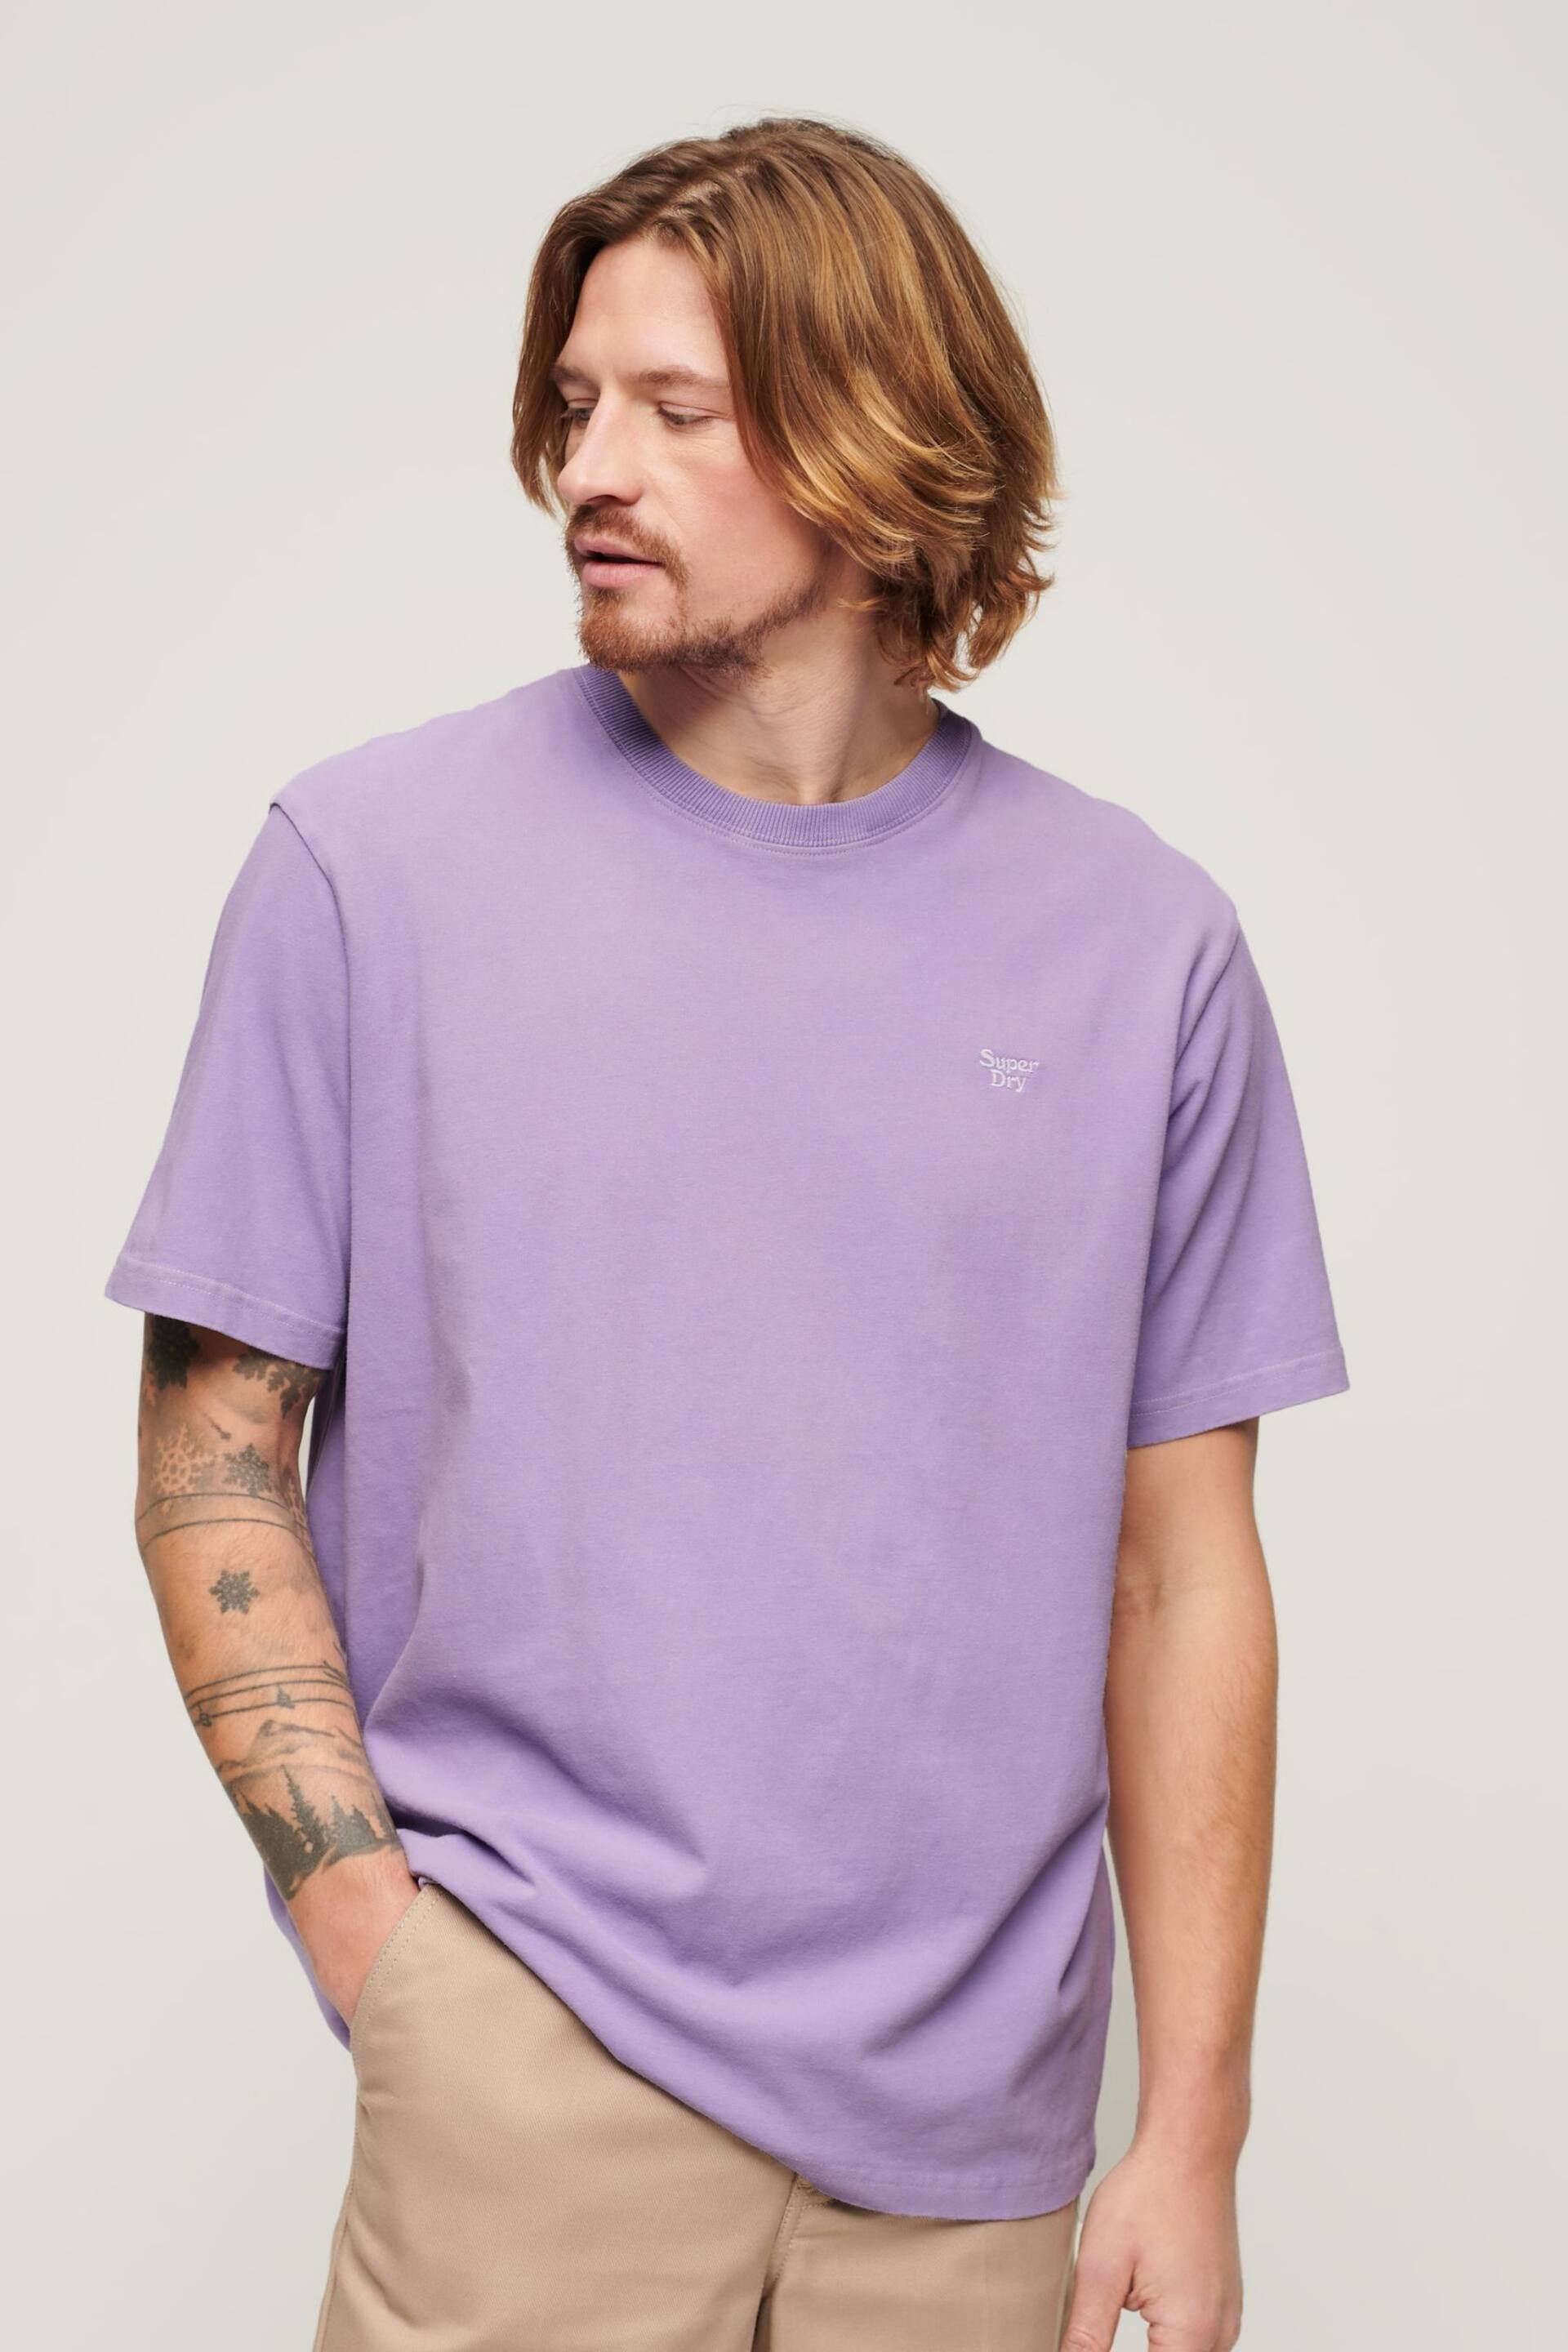 Superdry Purple Vintage Washed T-Shirt - Image 1 of 5